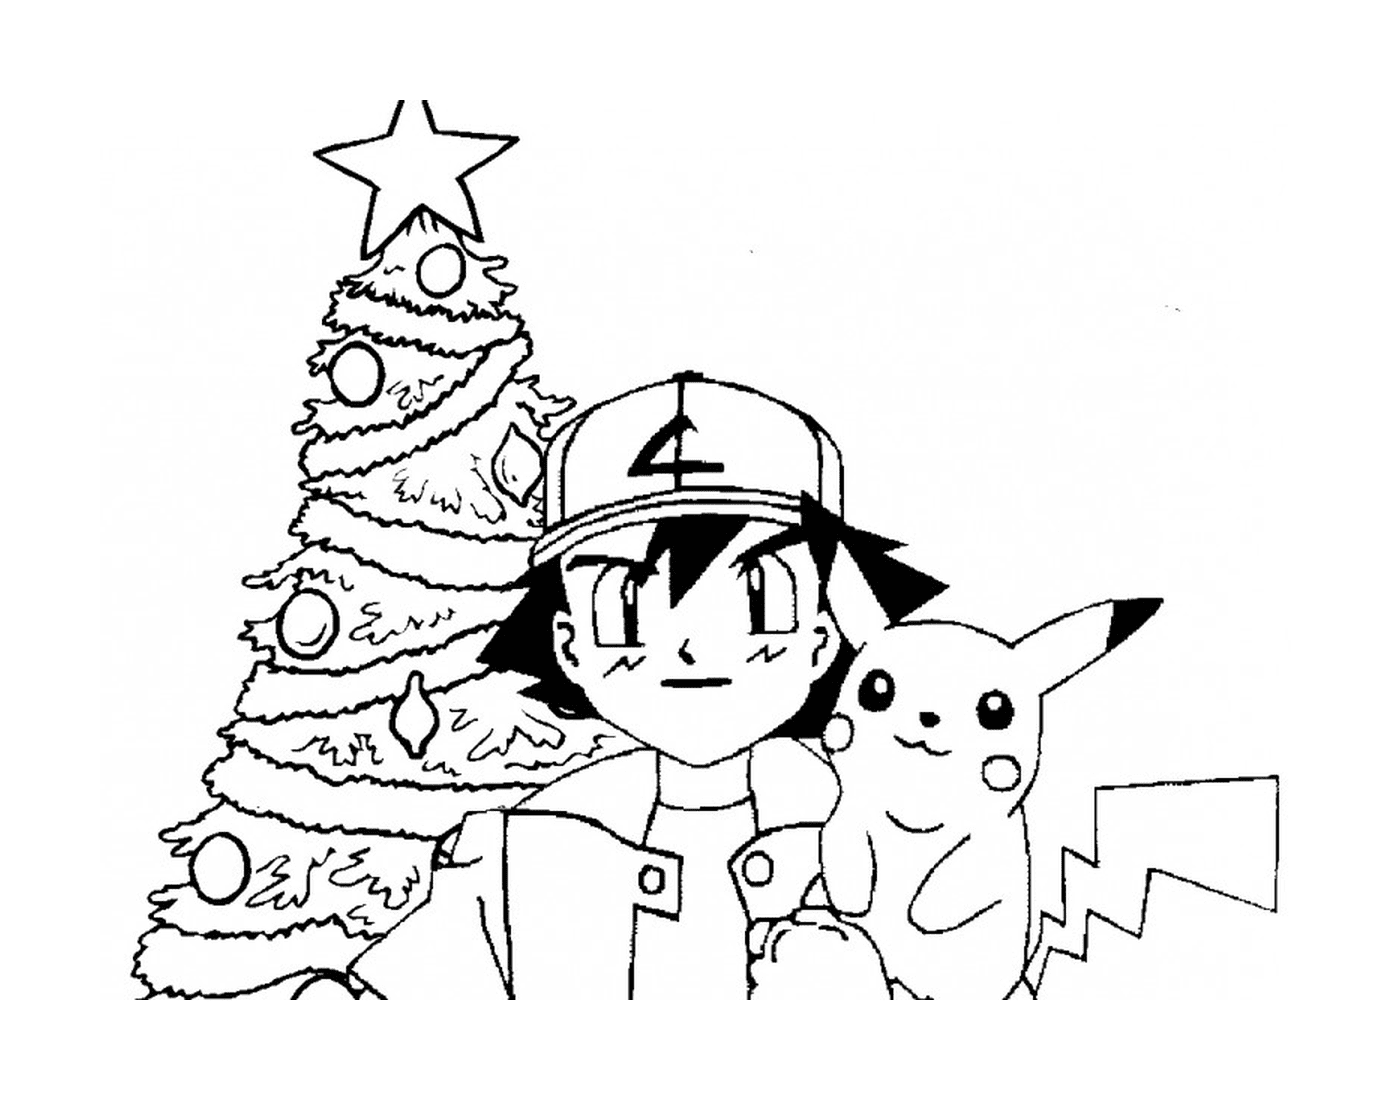  Sacha and Pikachu celebrate Christmas 